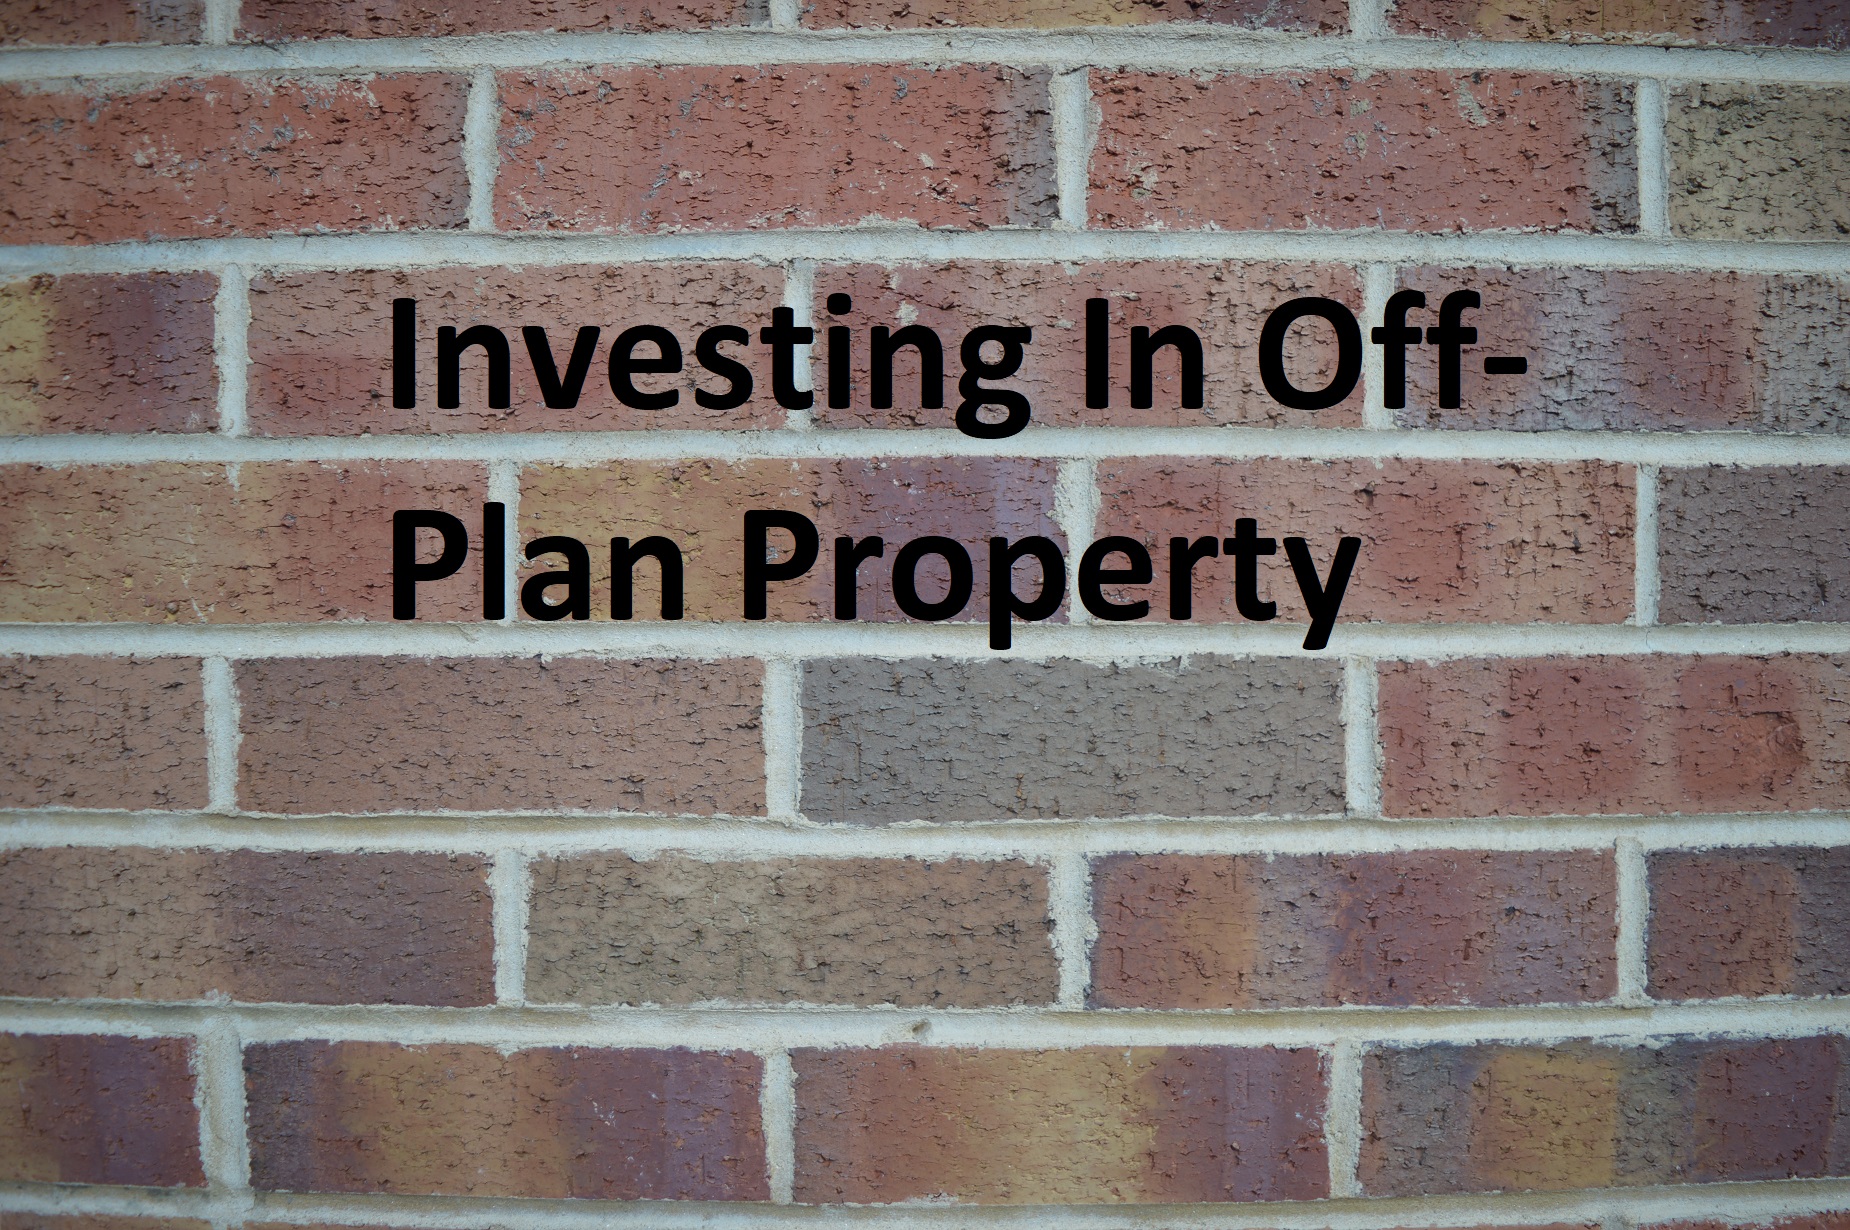 Off plan property